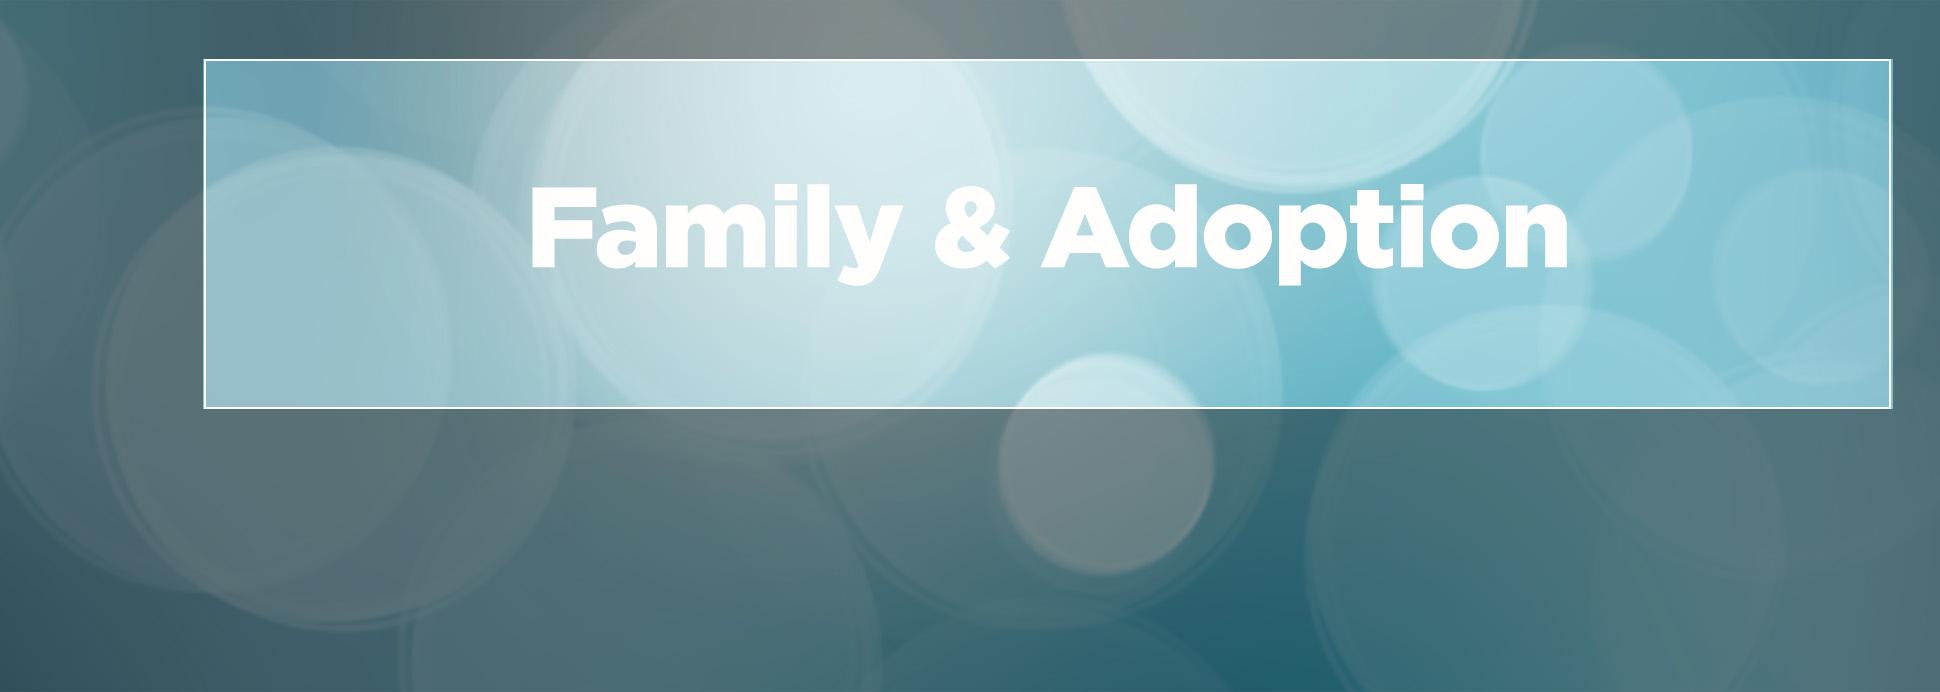 Short Film Block #1 - Family & Adoption